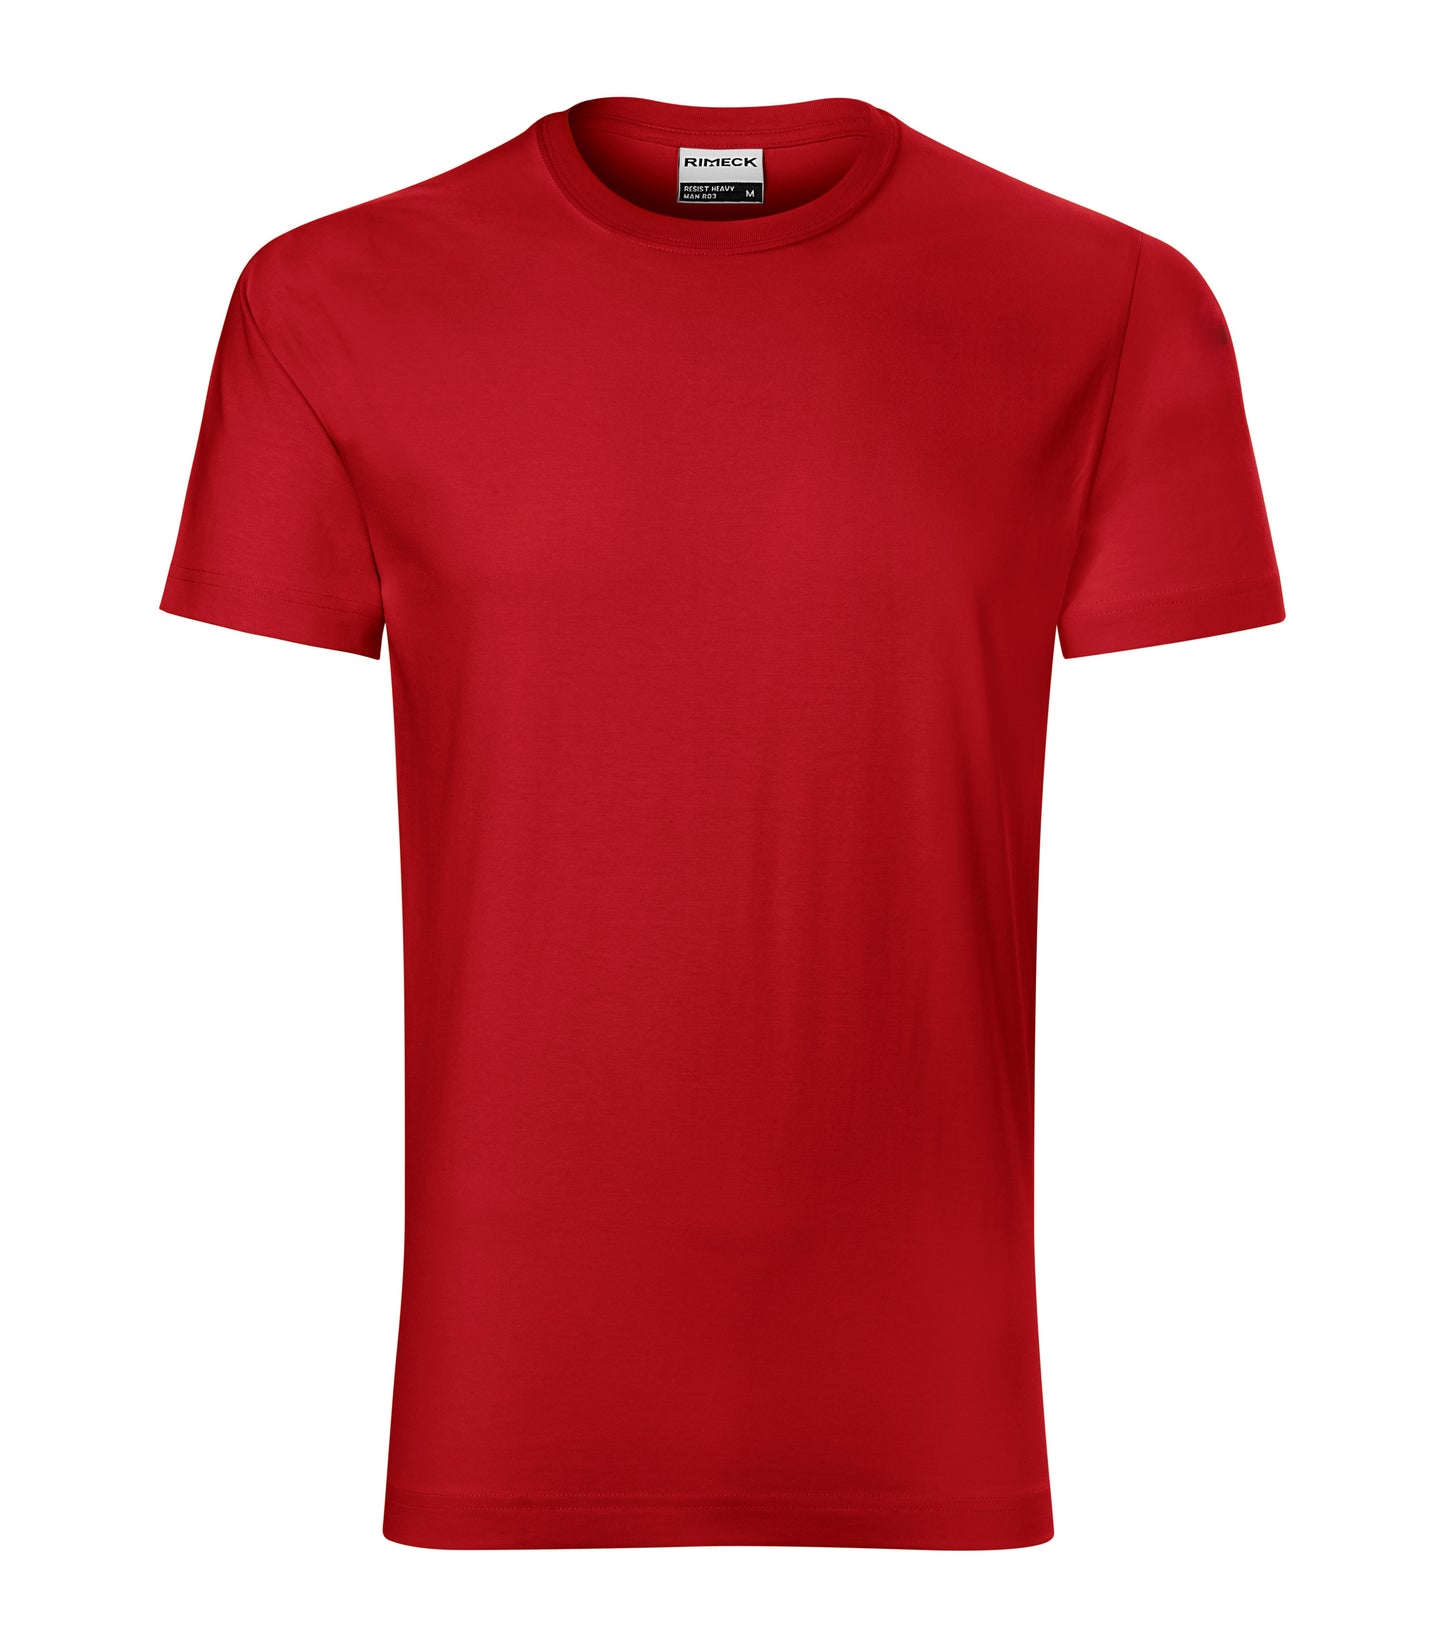 T-Shirt Kurzarm 100% Baumwolle